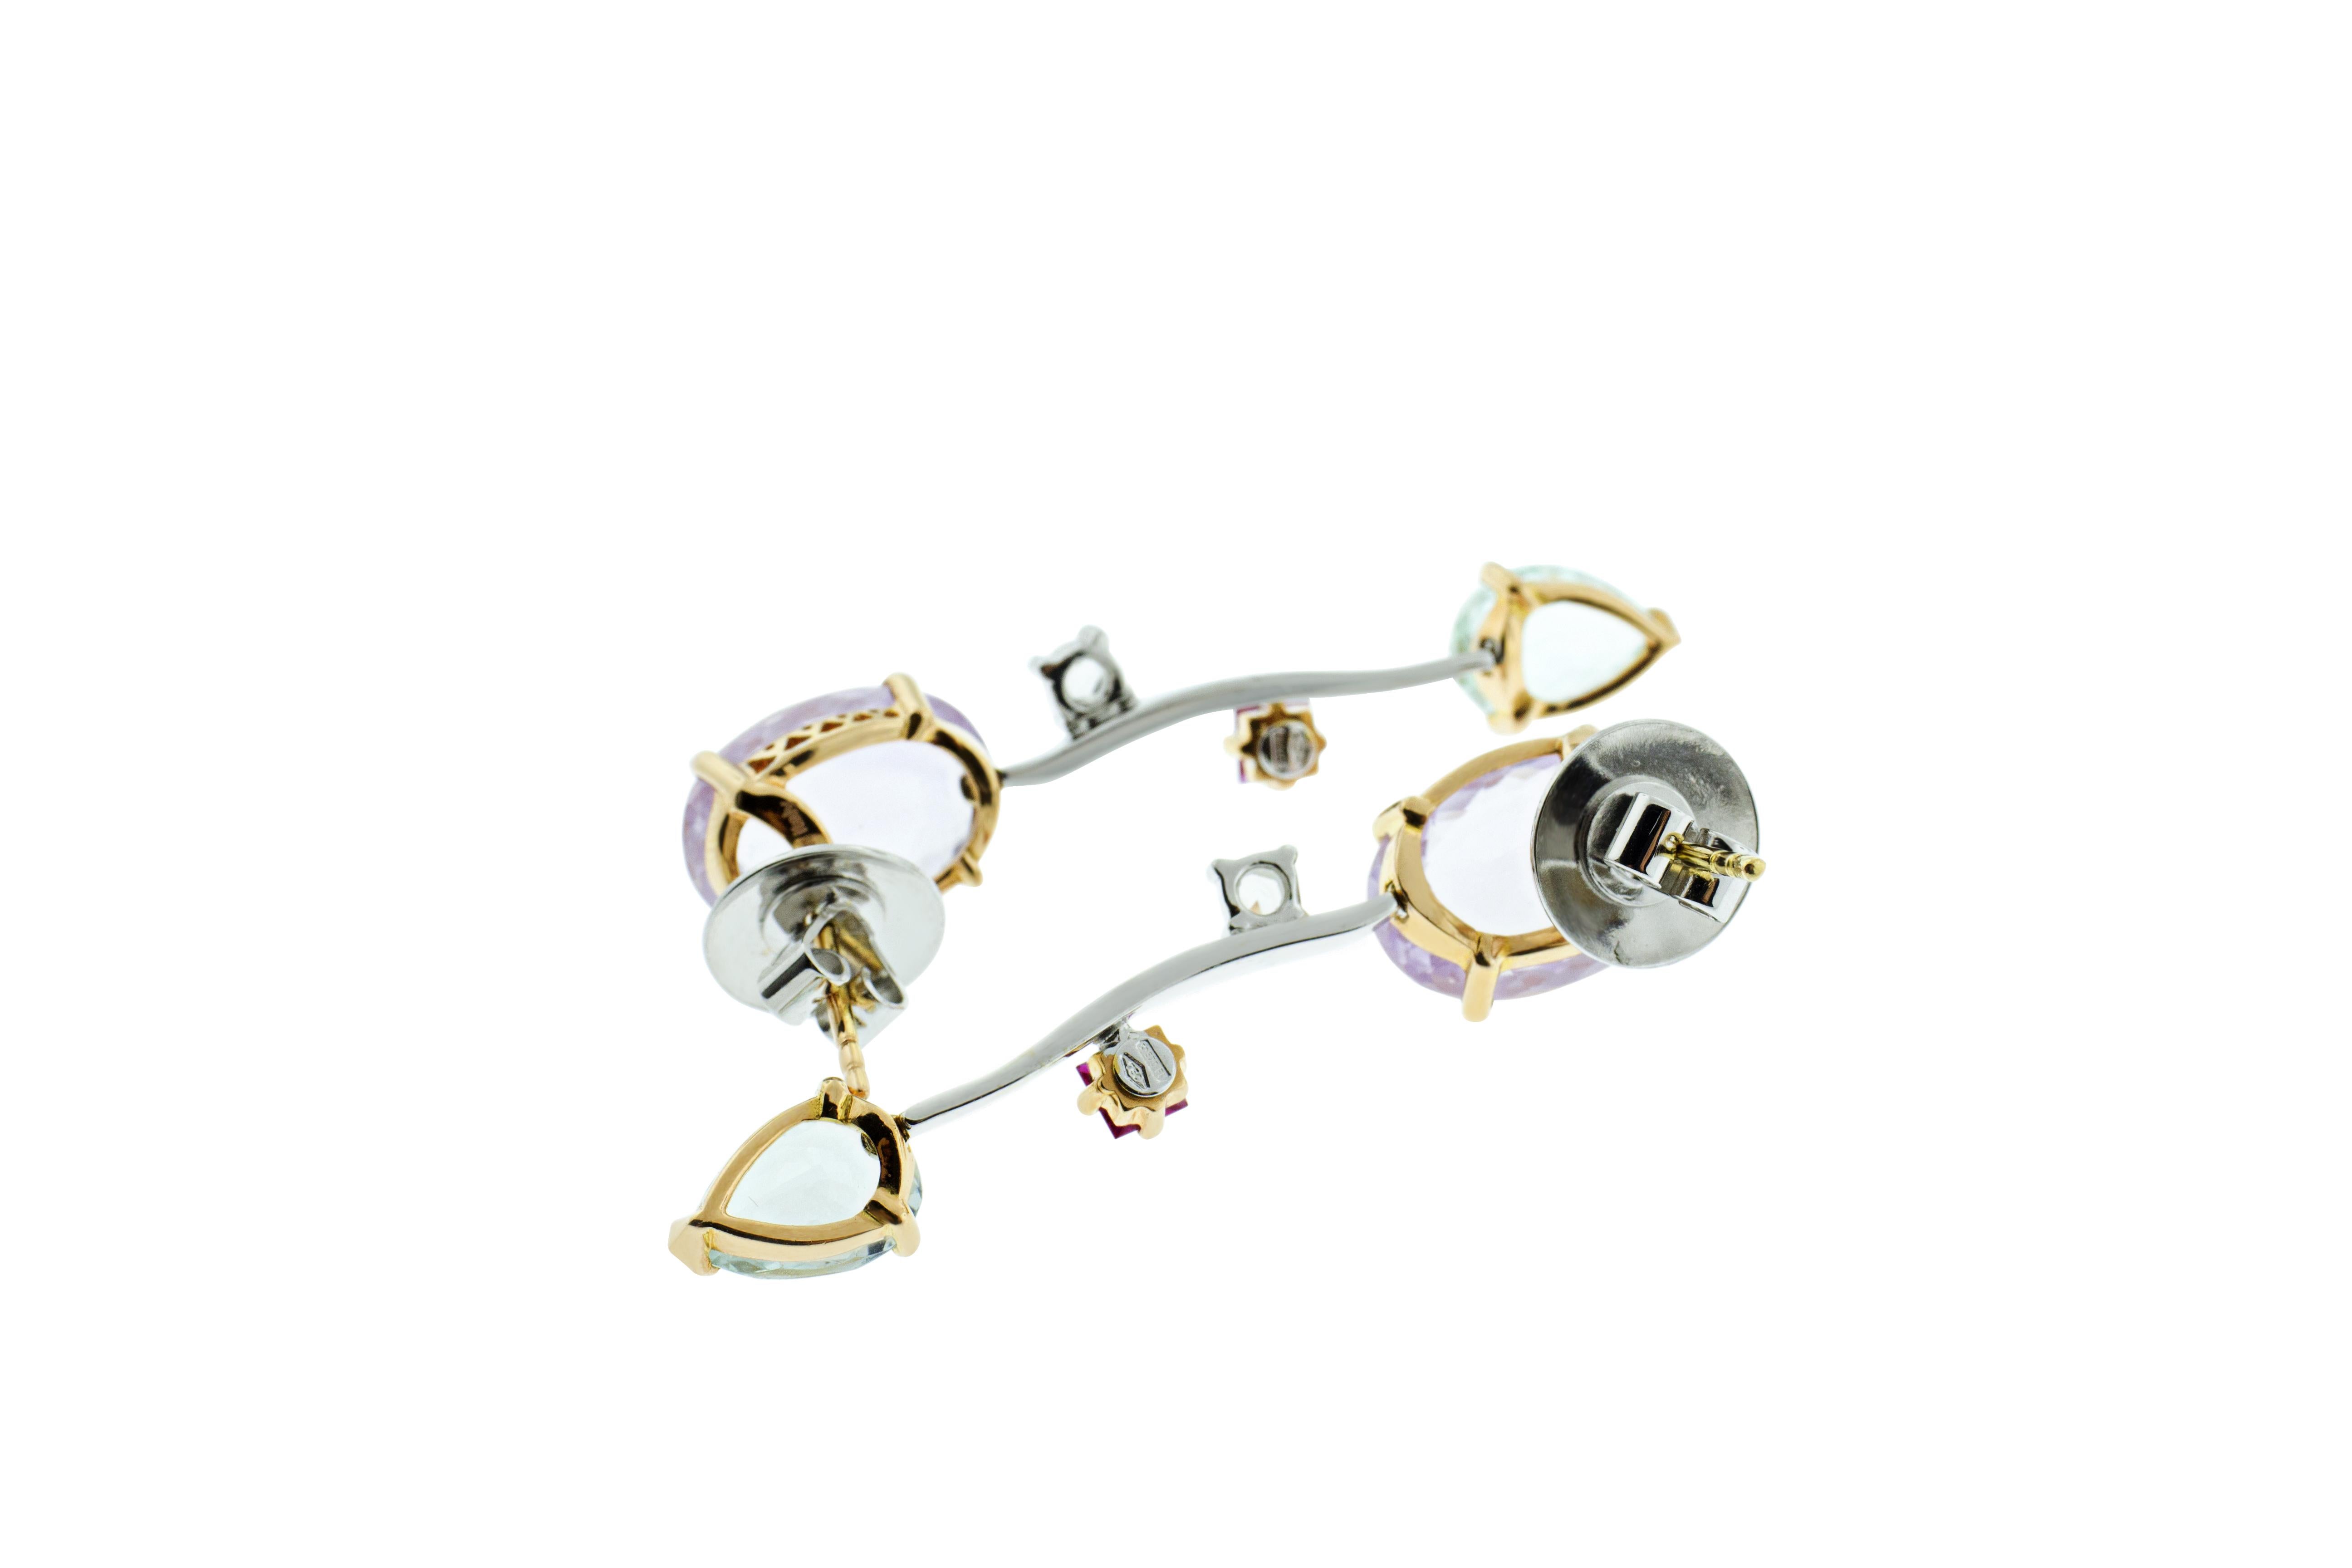 Oval Cut Ponte Vecchio Gioielli 18 Karat Yellow and White Gold Multi Gemstone Earrings